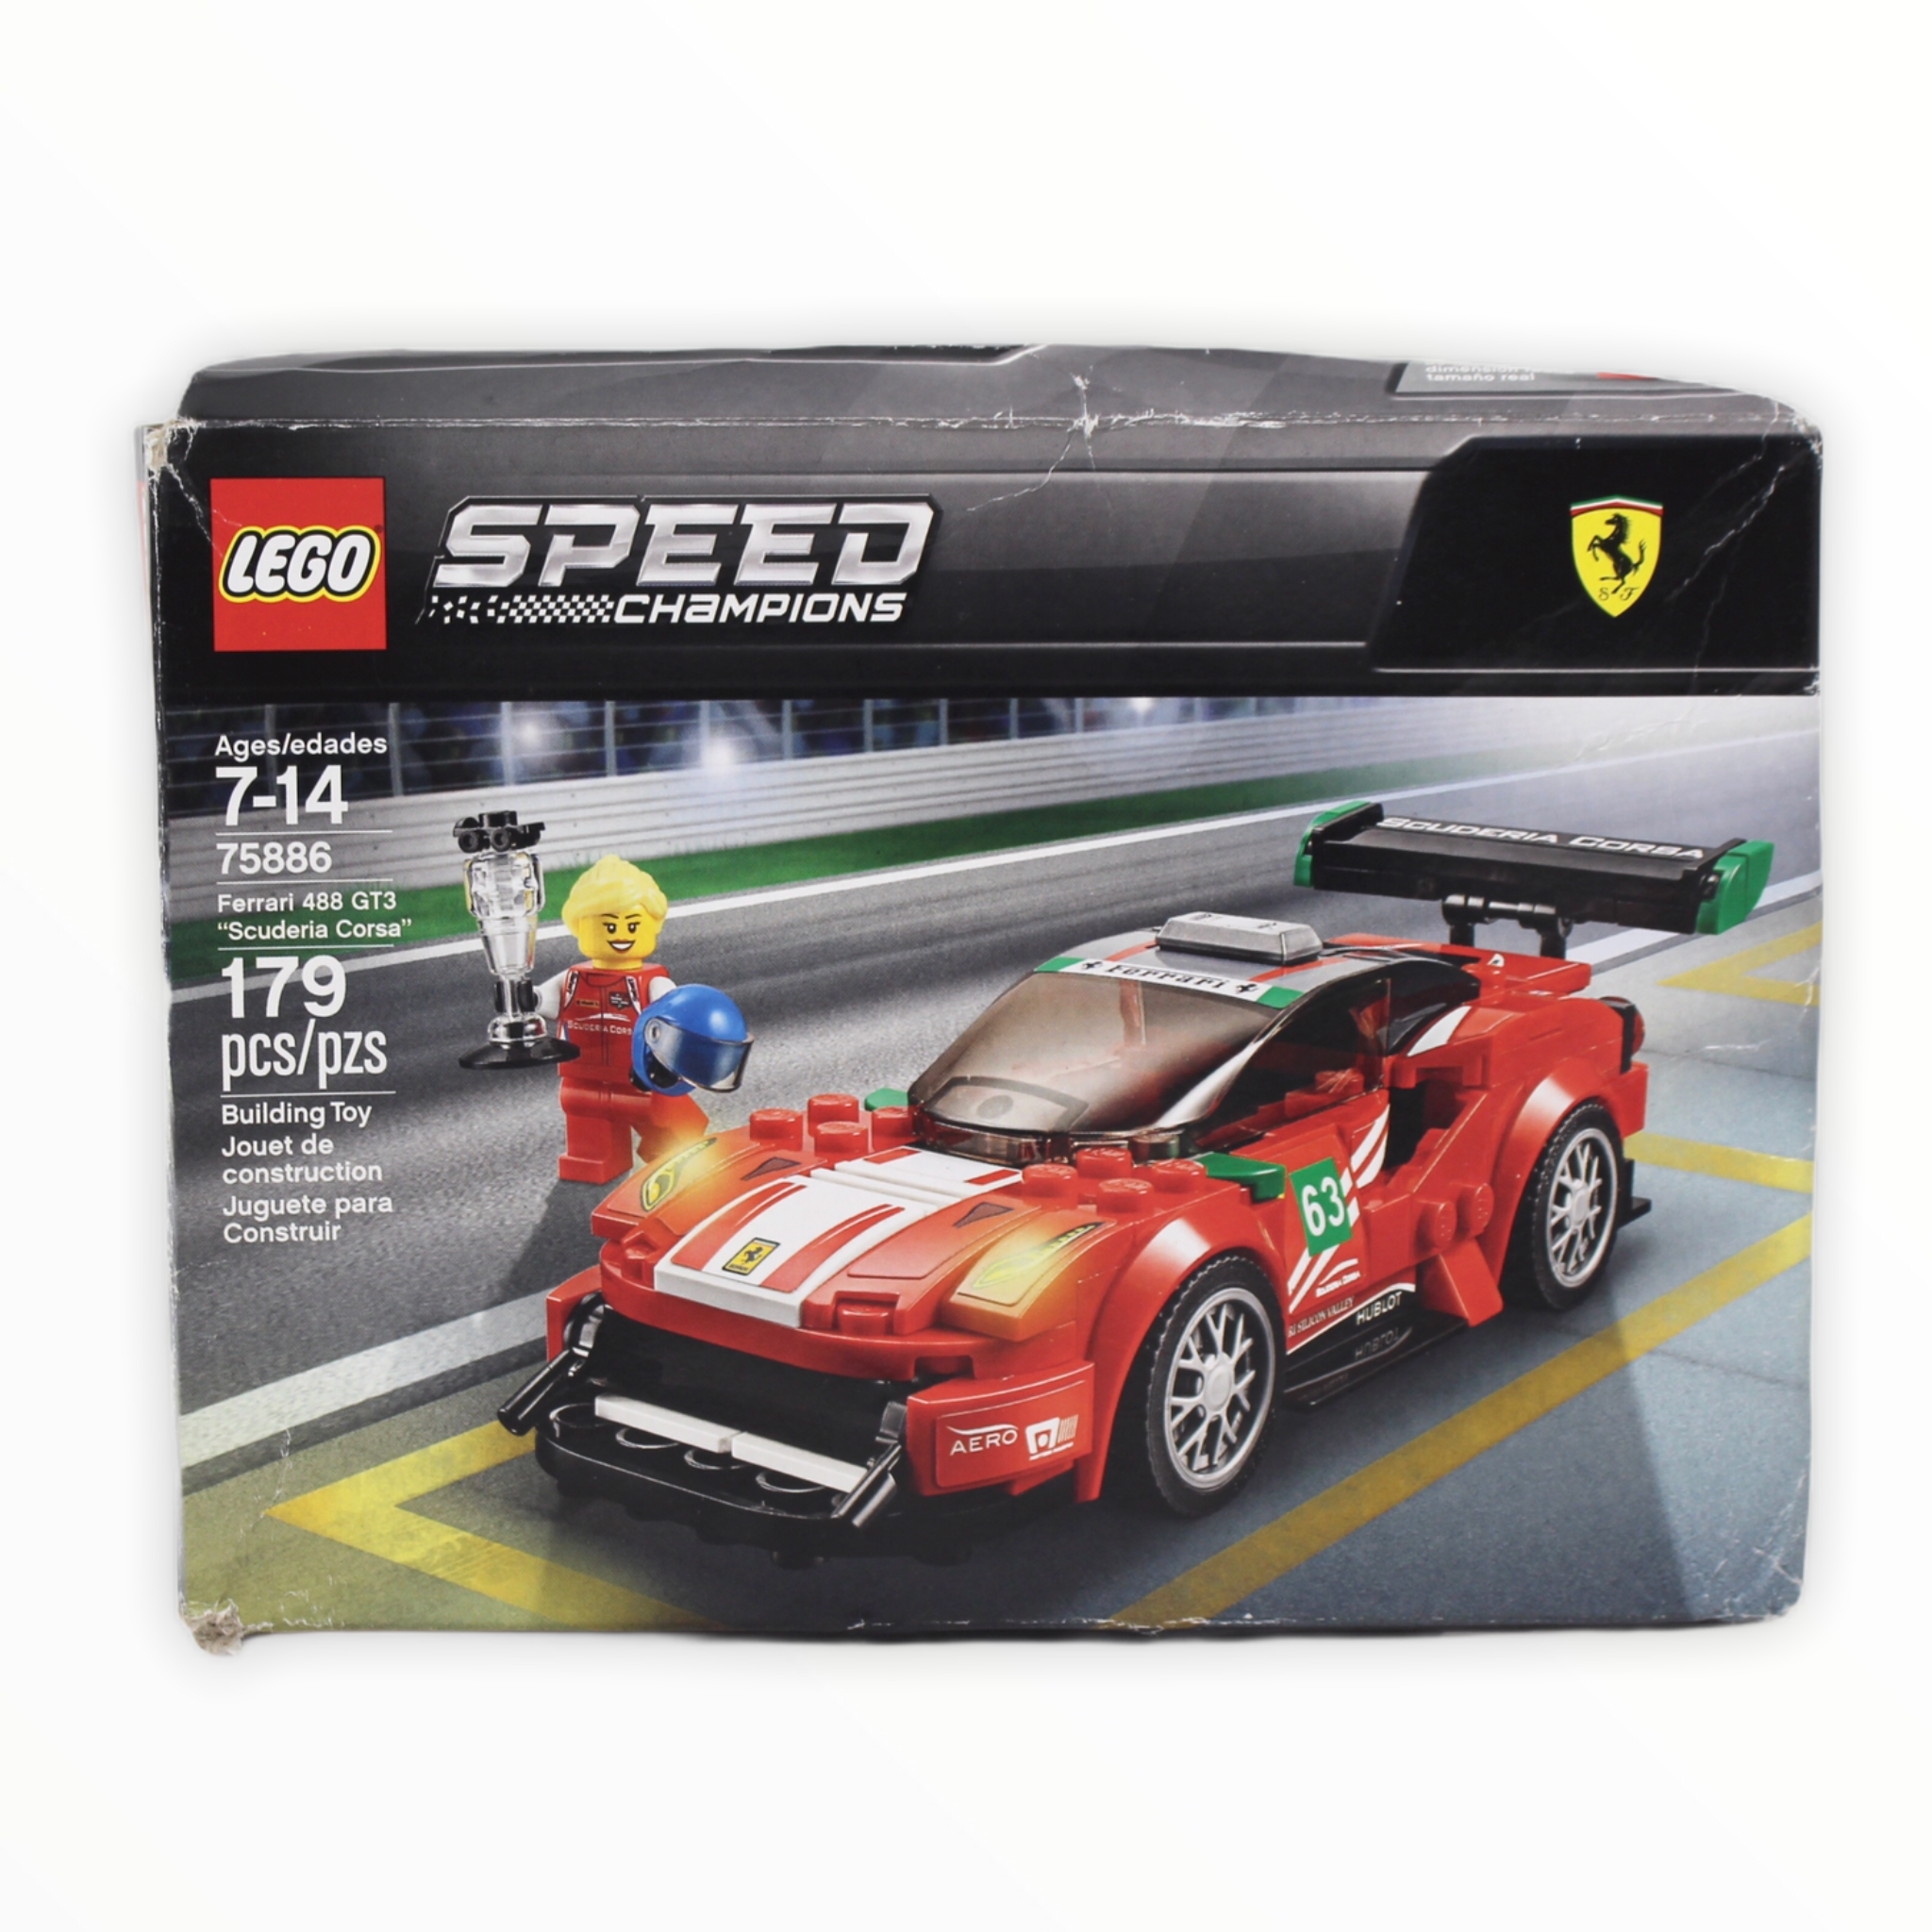 Certified Used Set 75886 Speed Champions Ferrari 488 GT3 “Scuderia Corsa”